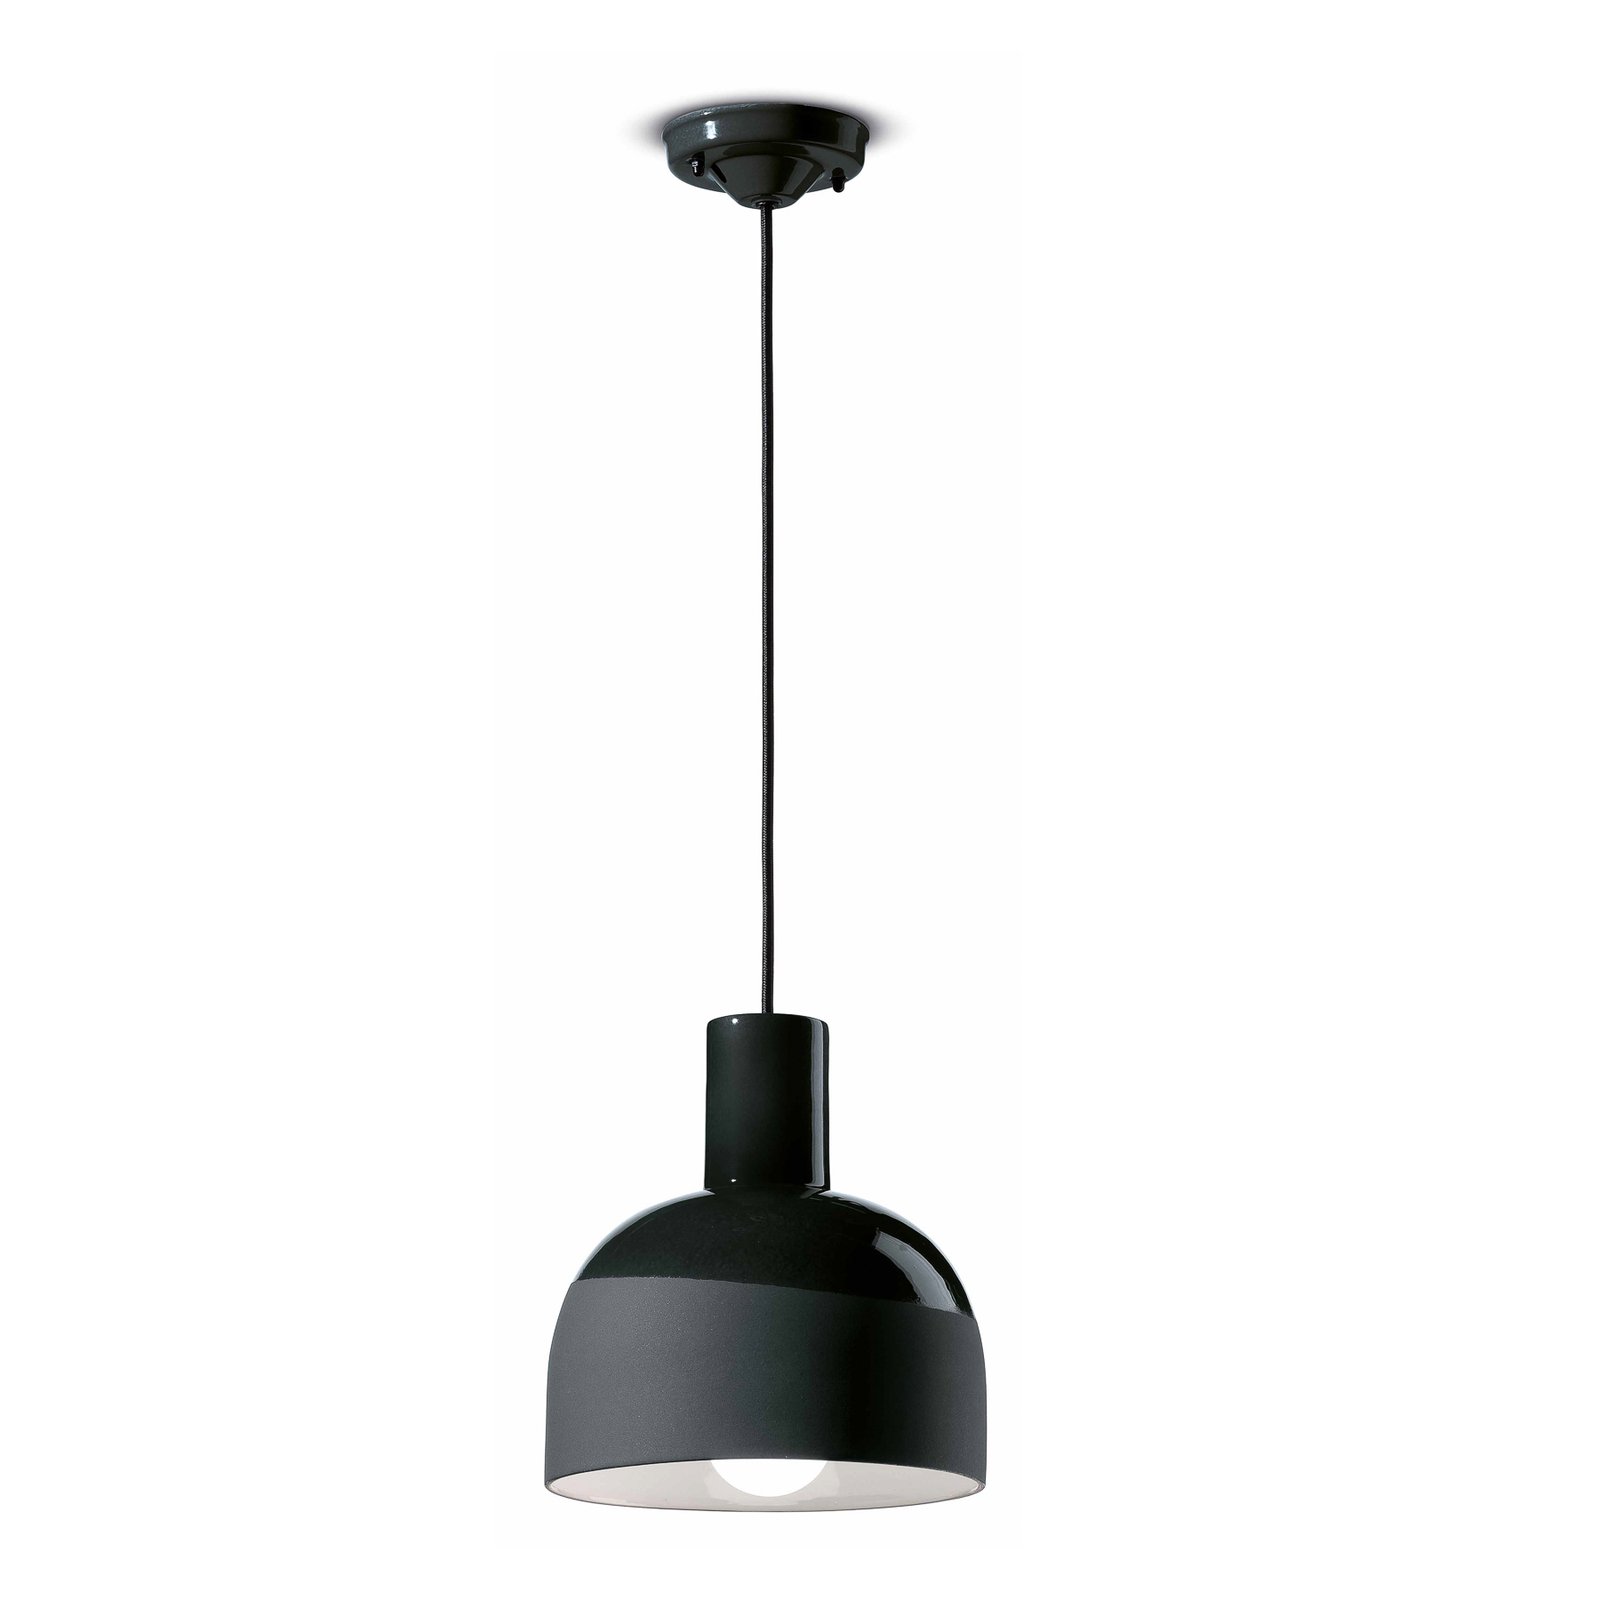 Caxixi hanglamp van keramiek, zwart